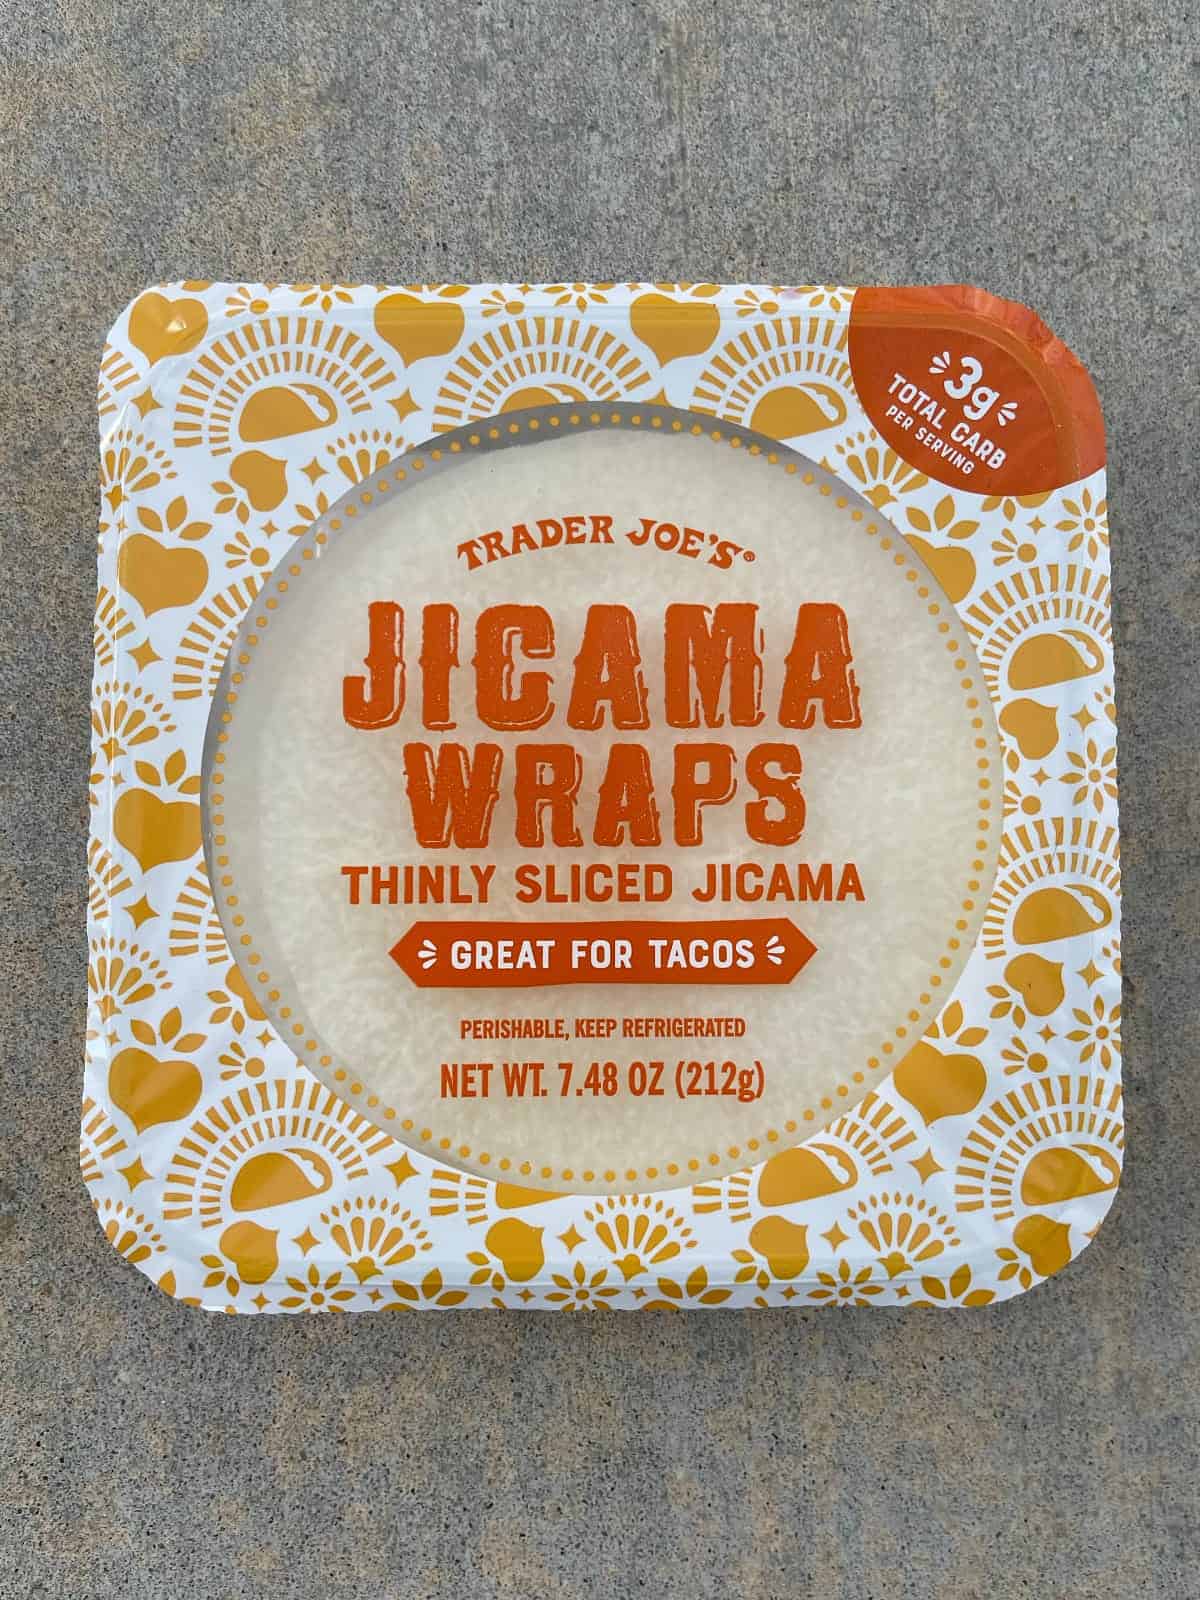 Package of jicama wraps from Trader Joe's.